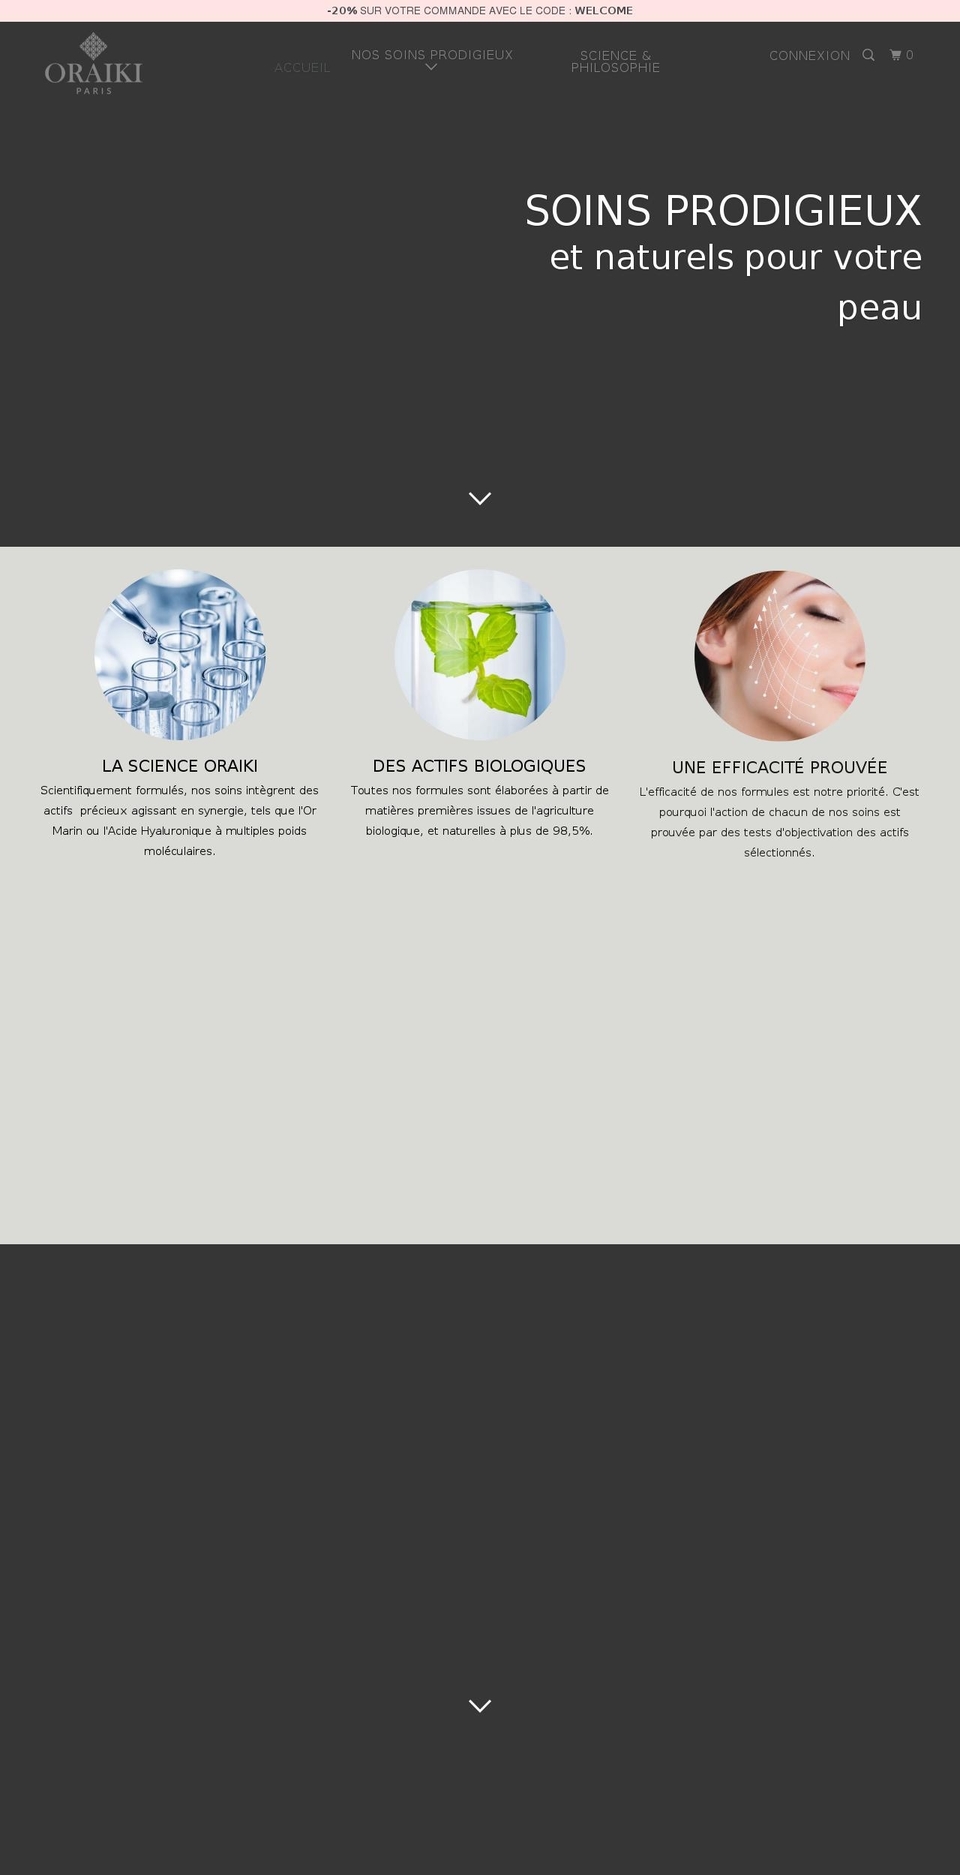 oraiki.paris shopify website screenshot